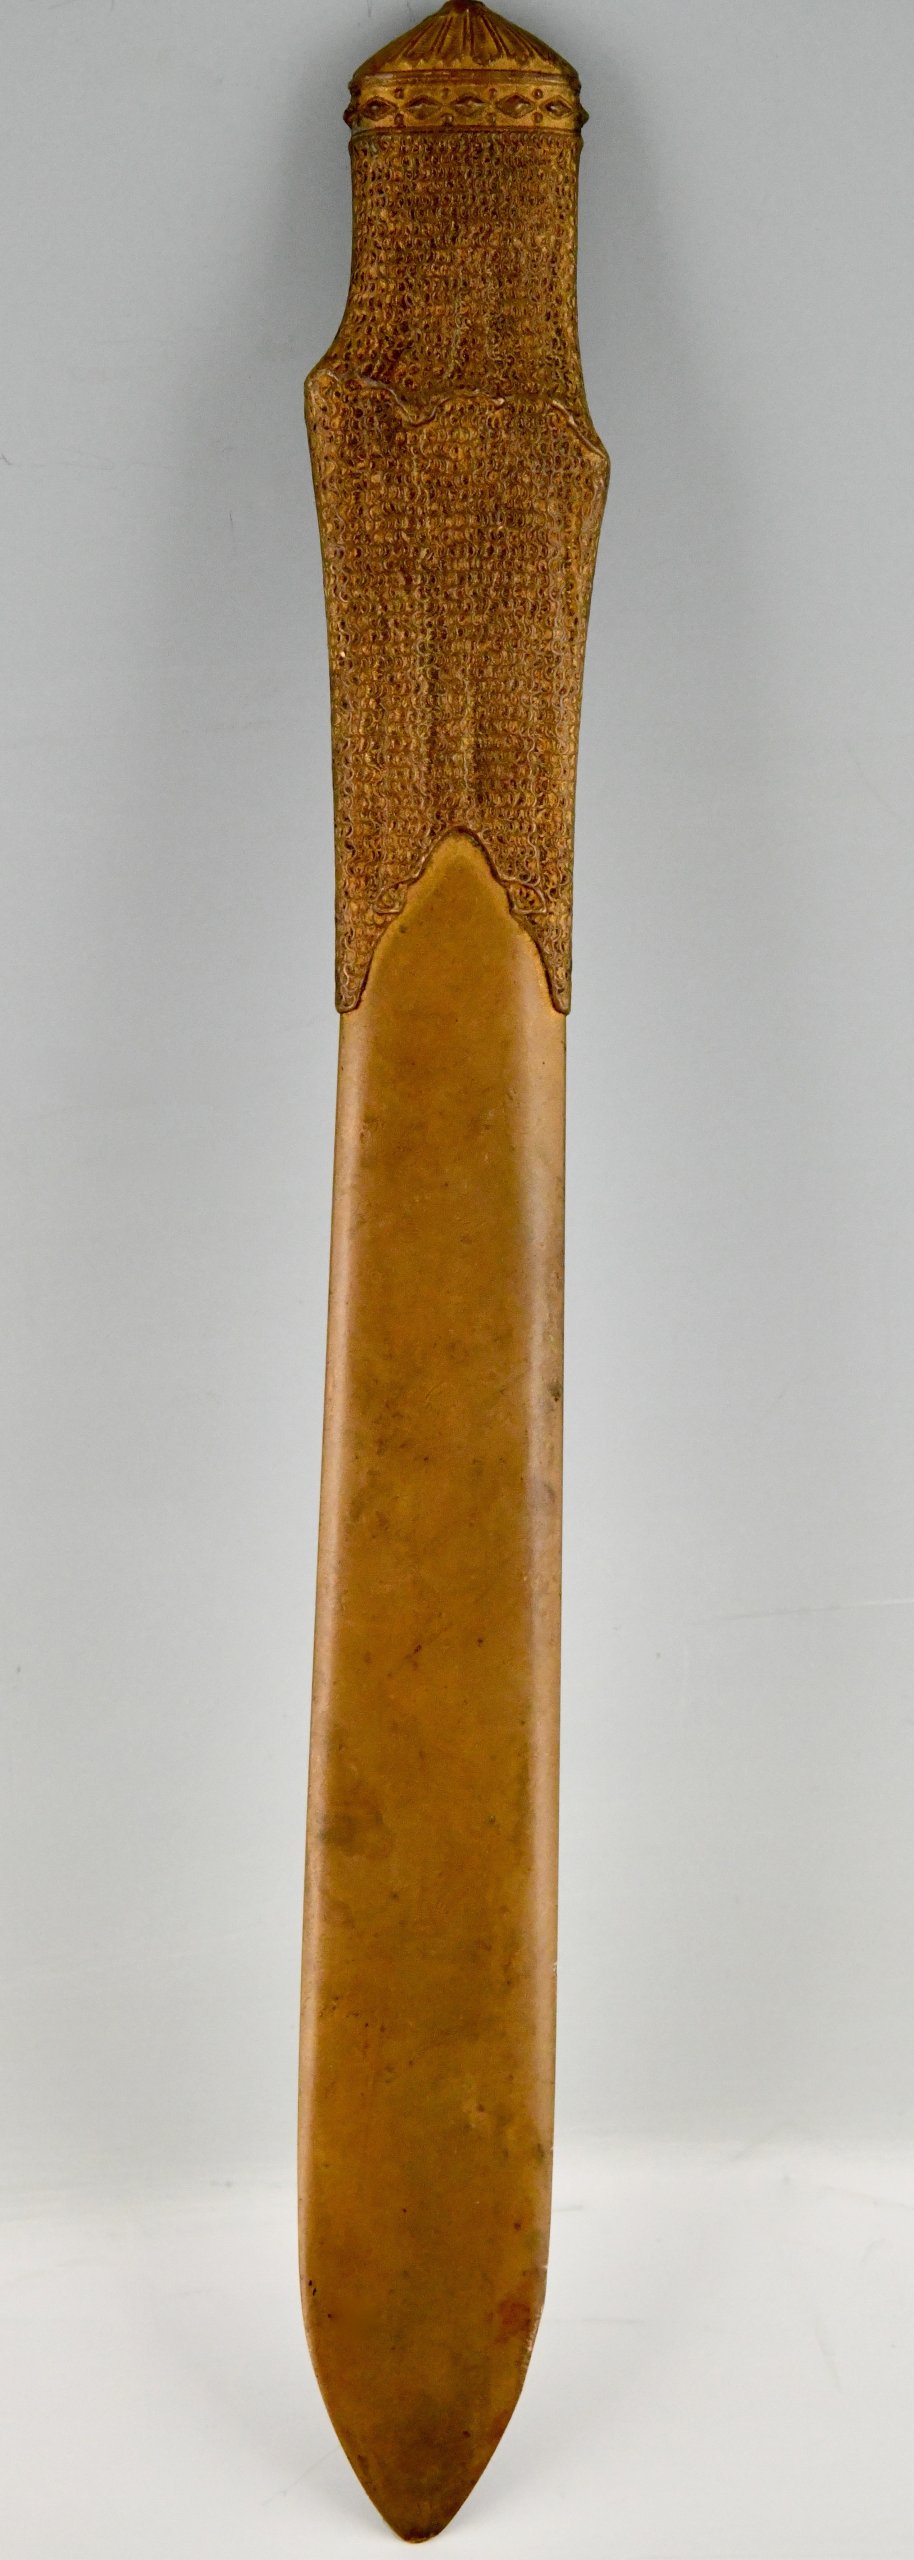 Art nouveau bronze bookmark knight in chain mail